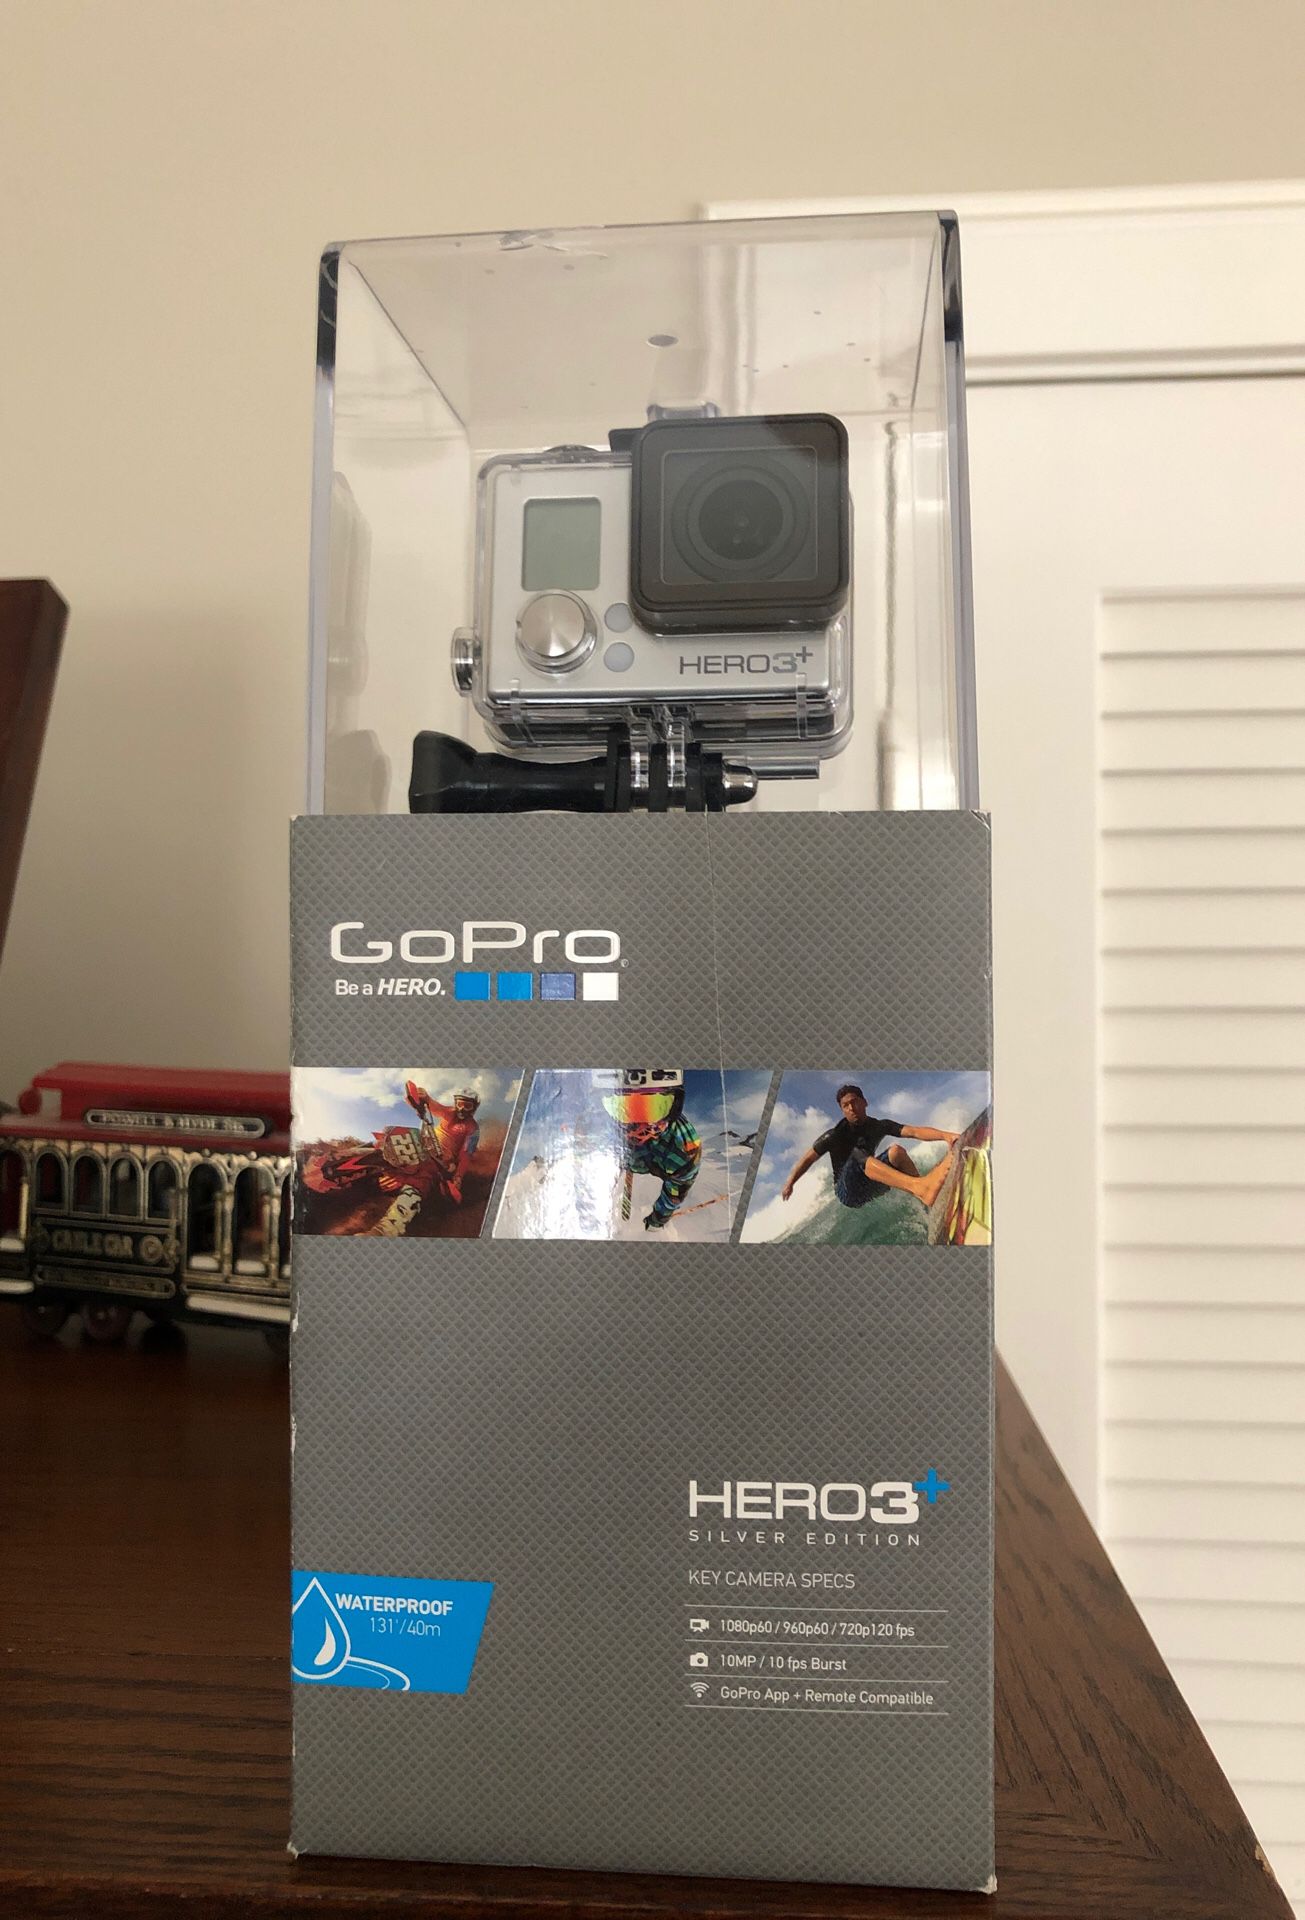 New in box GoPro Hero3+. Never been opened